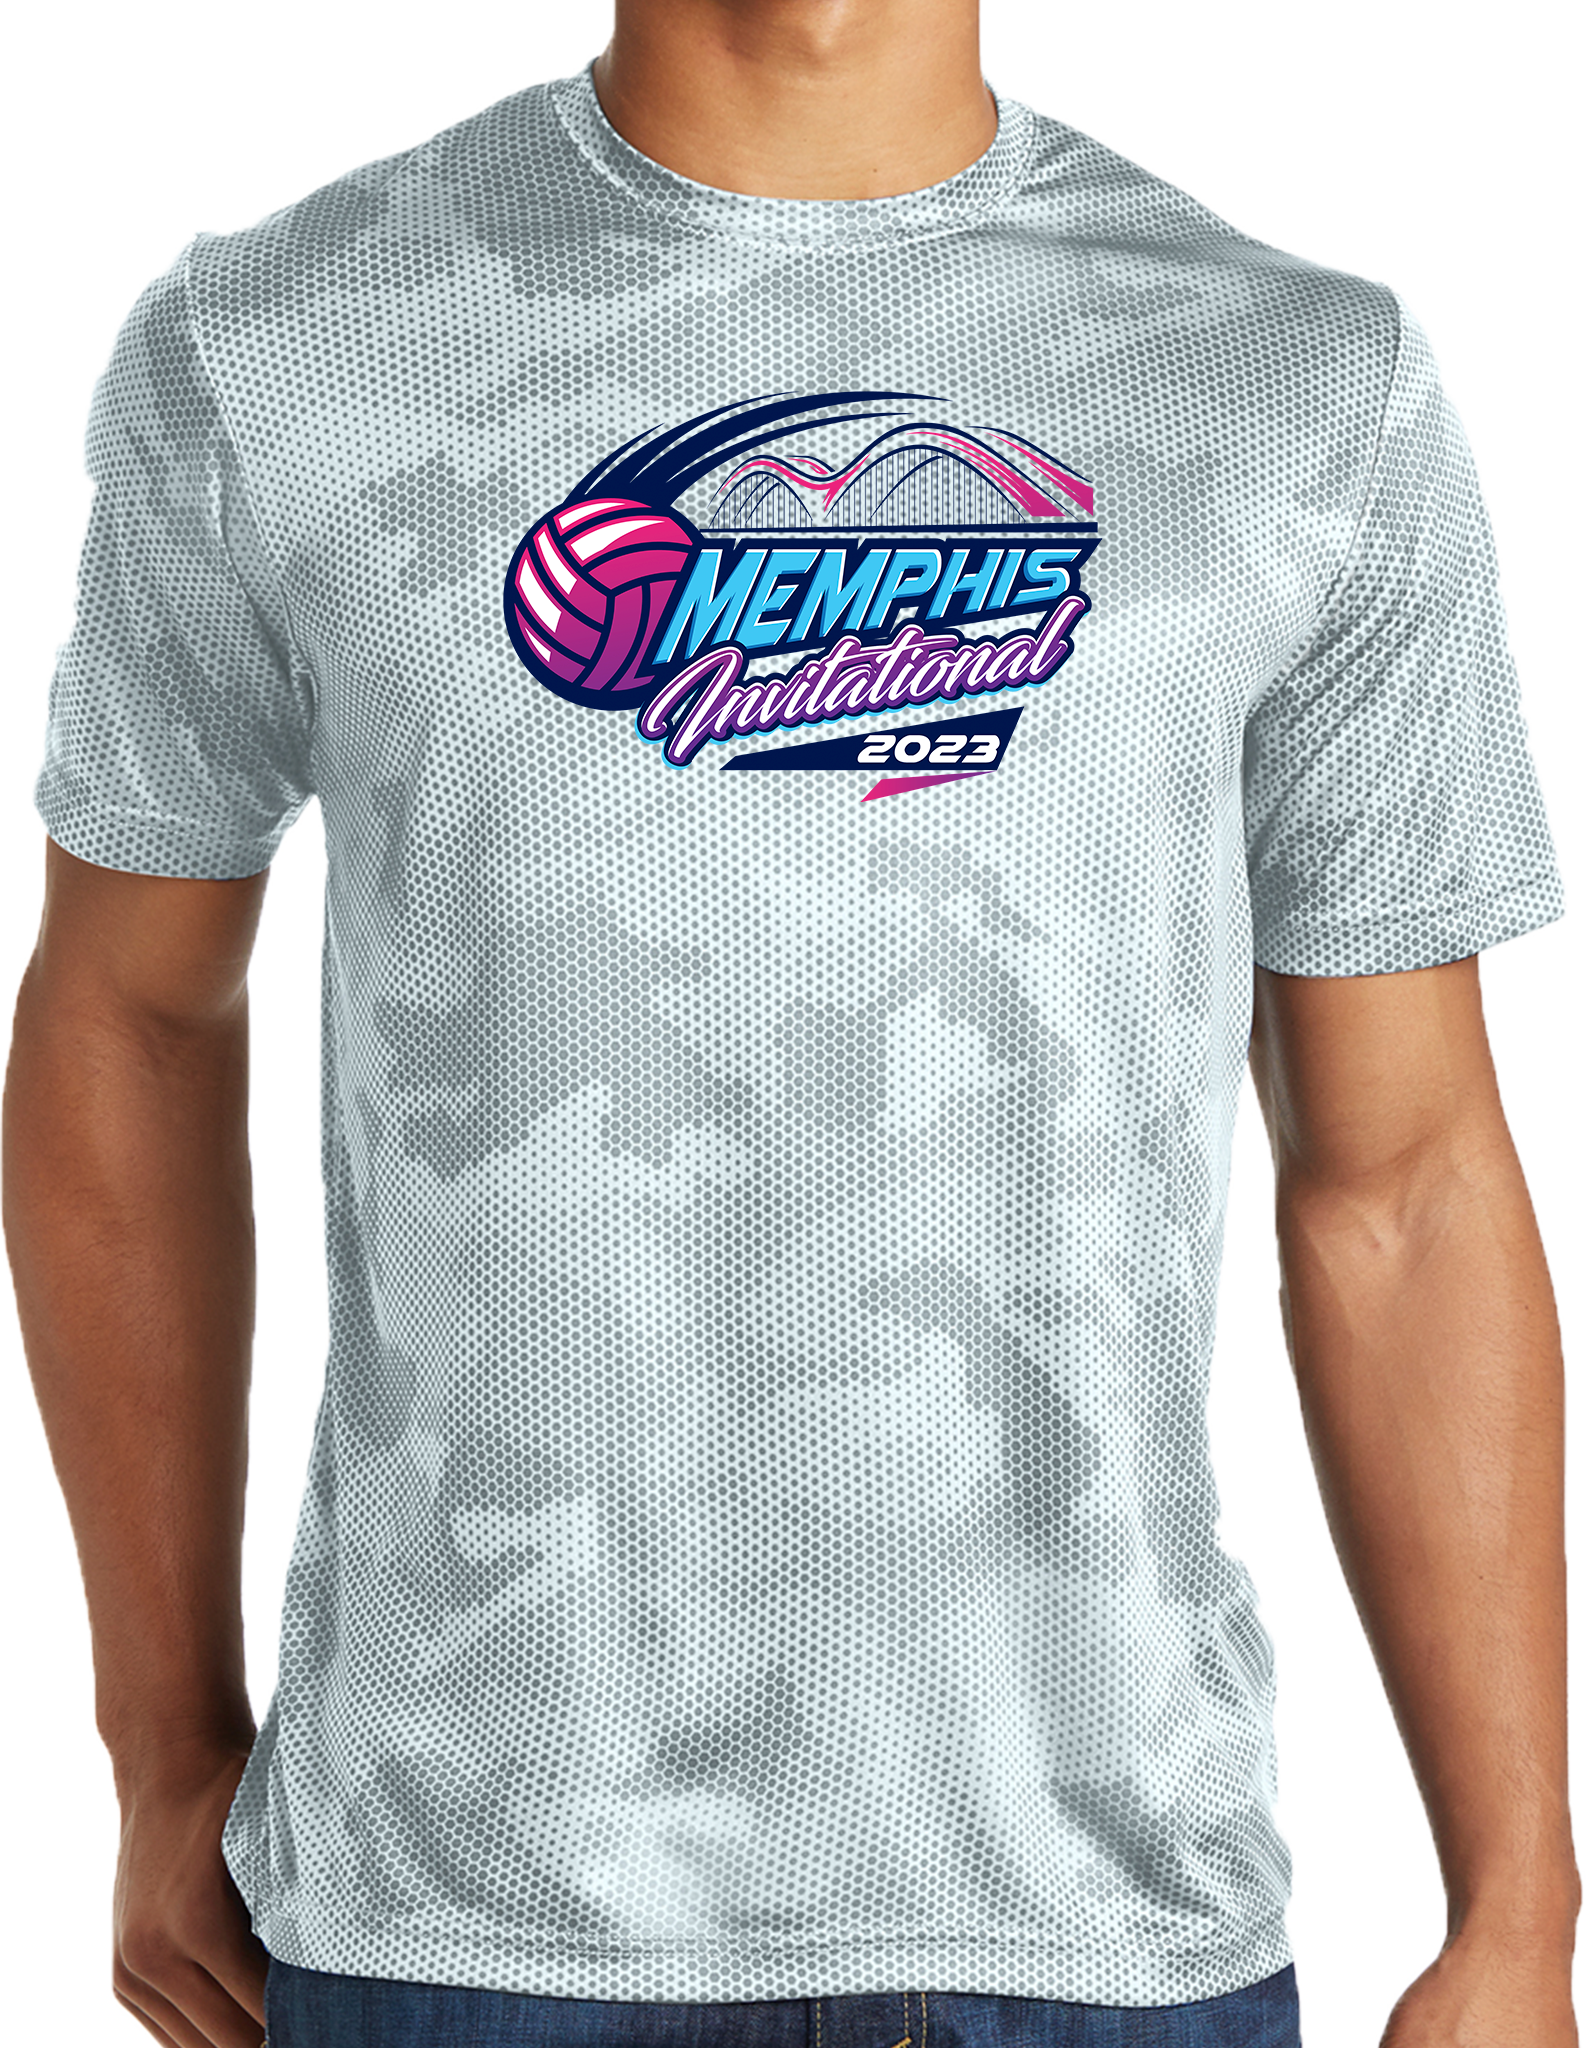 PERFORMANCE SHIRTS - 2023 Memphis Invitational